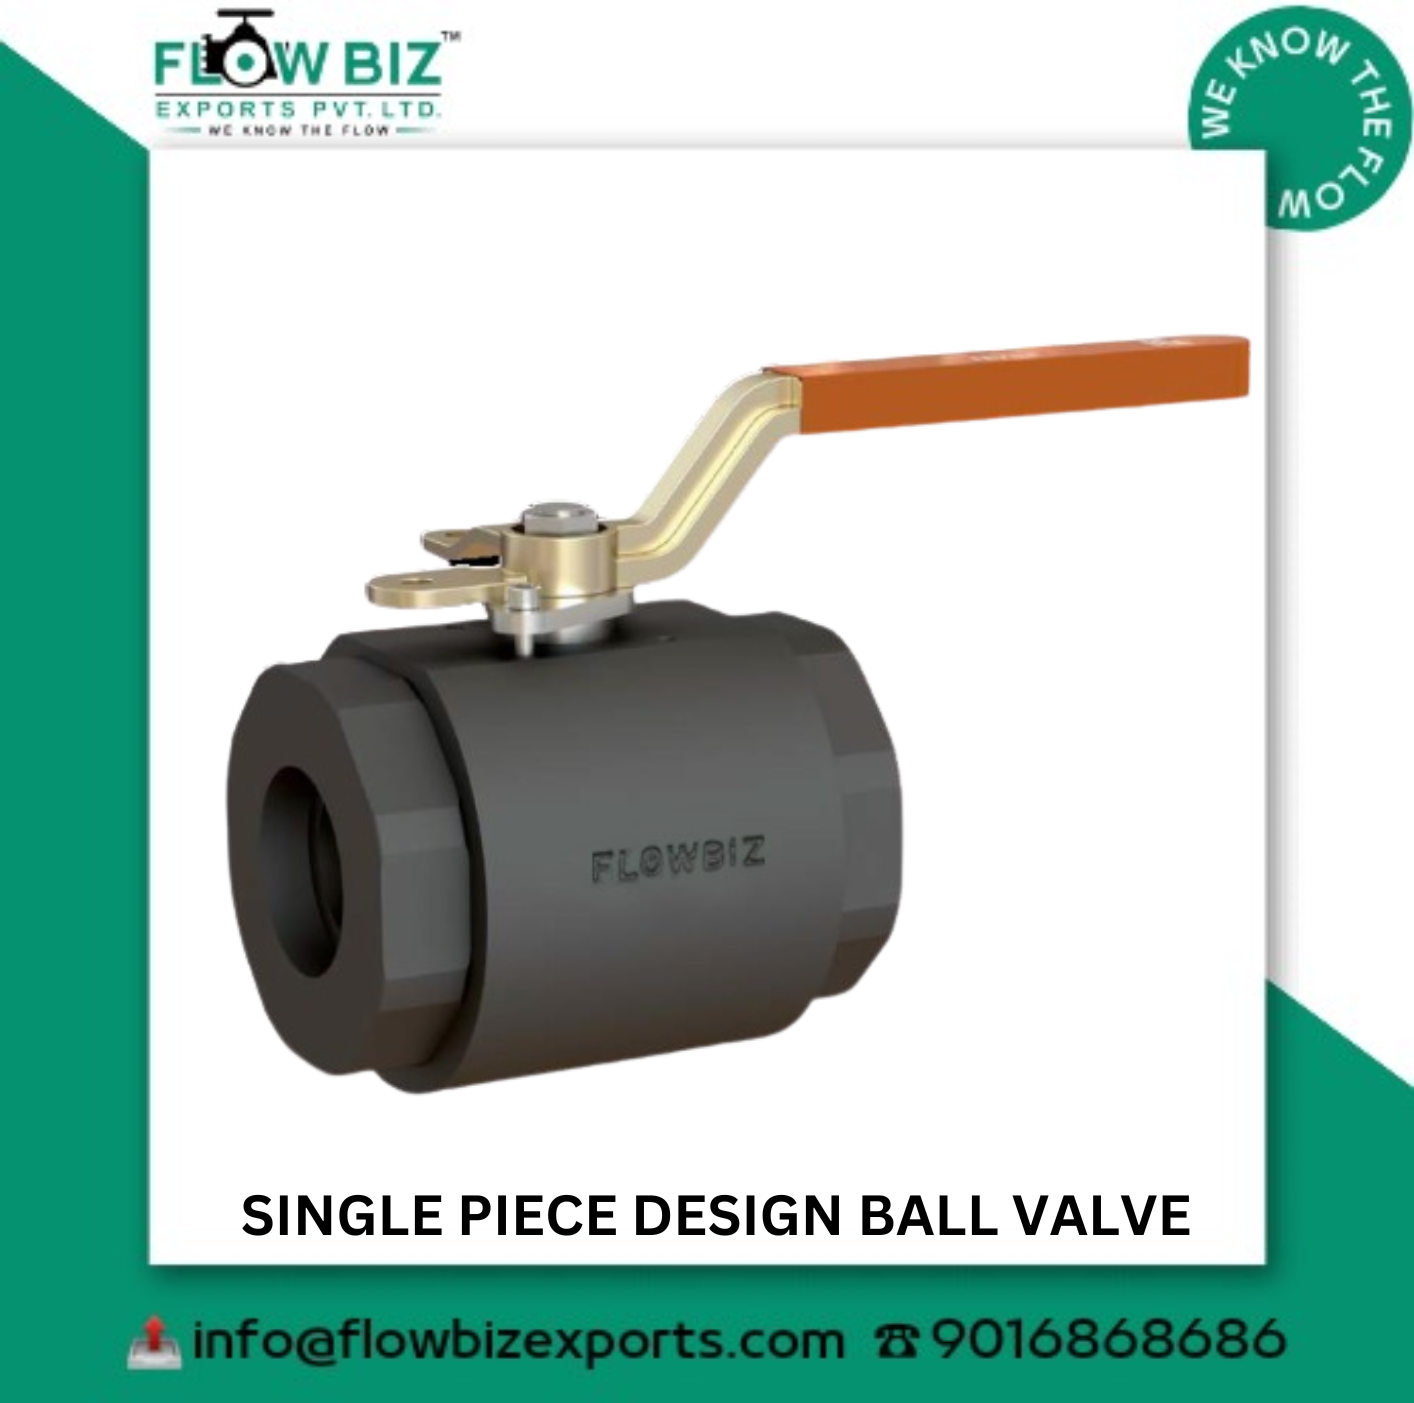 single piece ball valve Manufacturer pune - FlowBiz